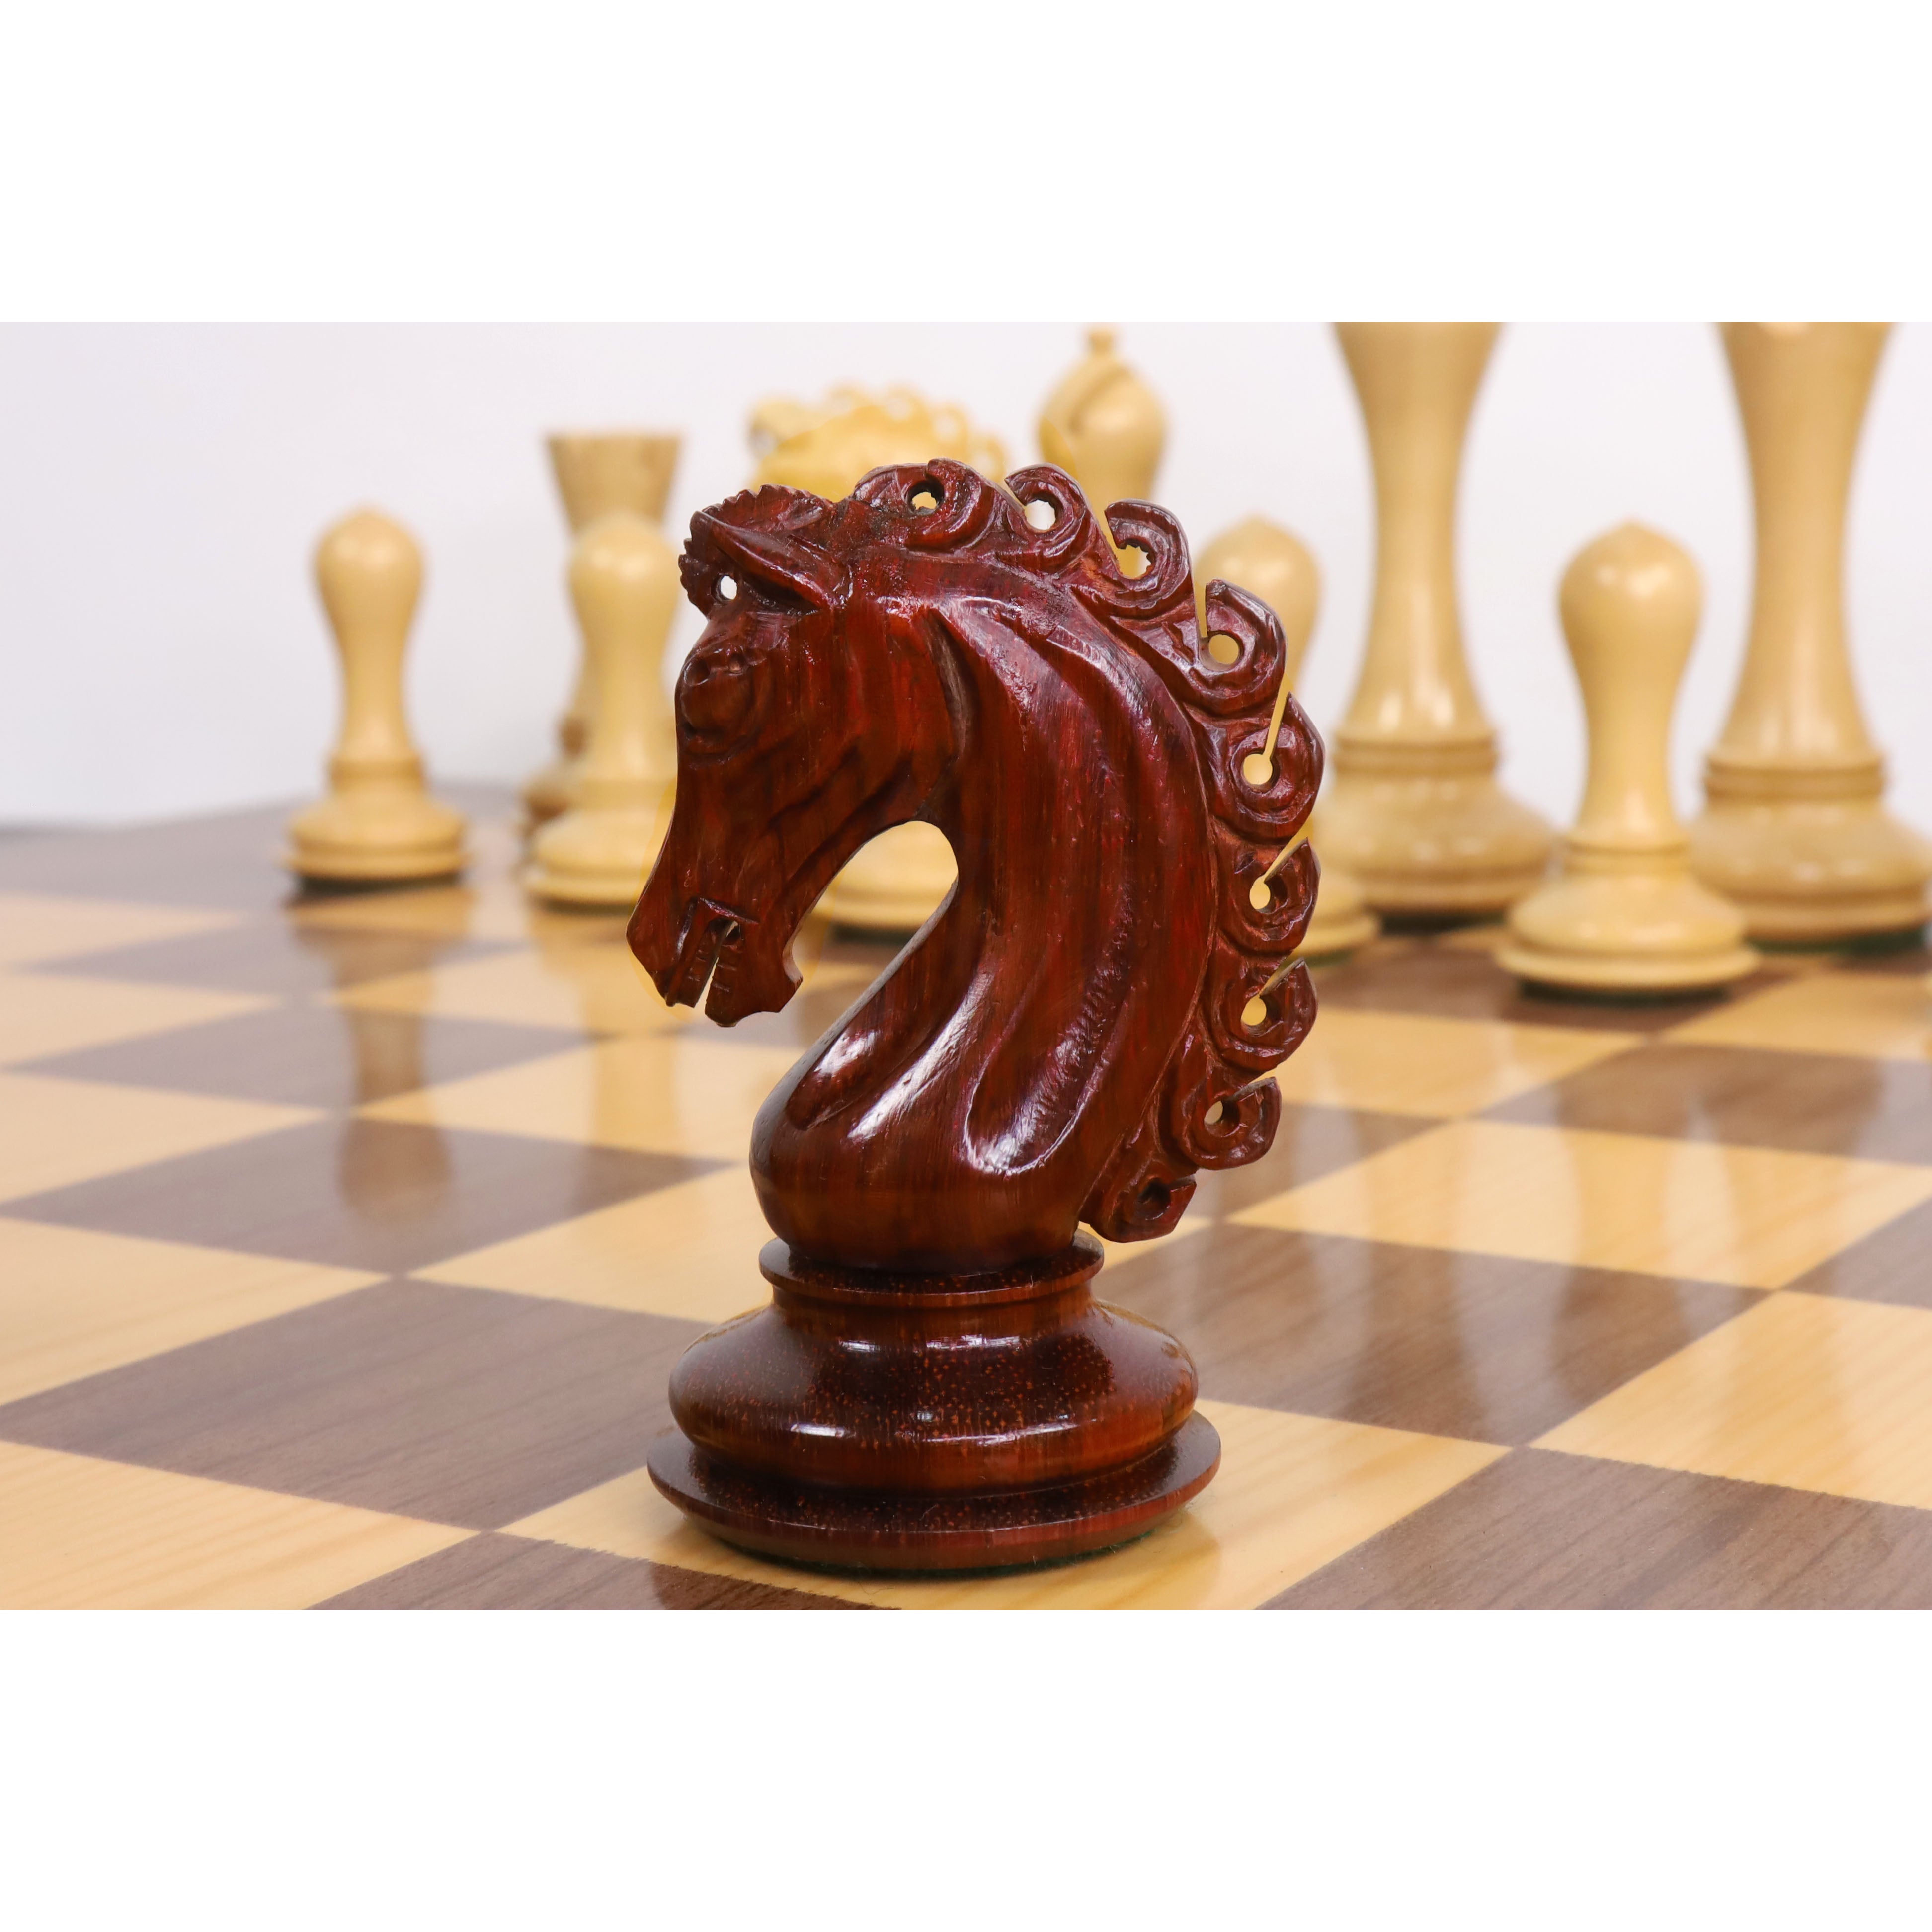 Slightly Imperfect 4.6" Avant Garde Luxury Staunton Chess Pieces Only Set - Bud Rosewood & Boxwood